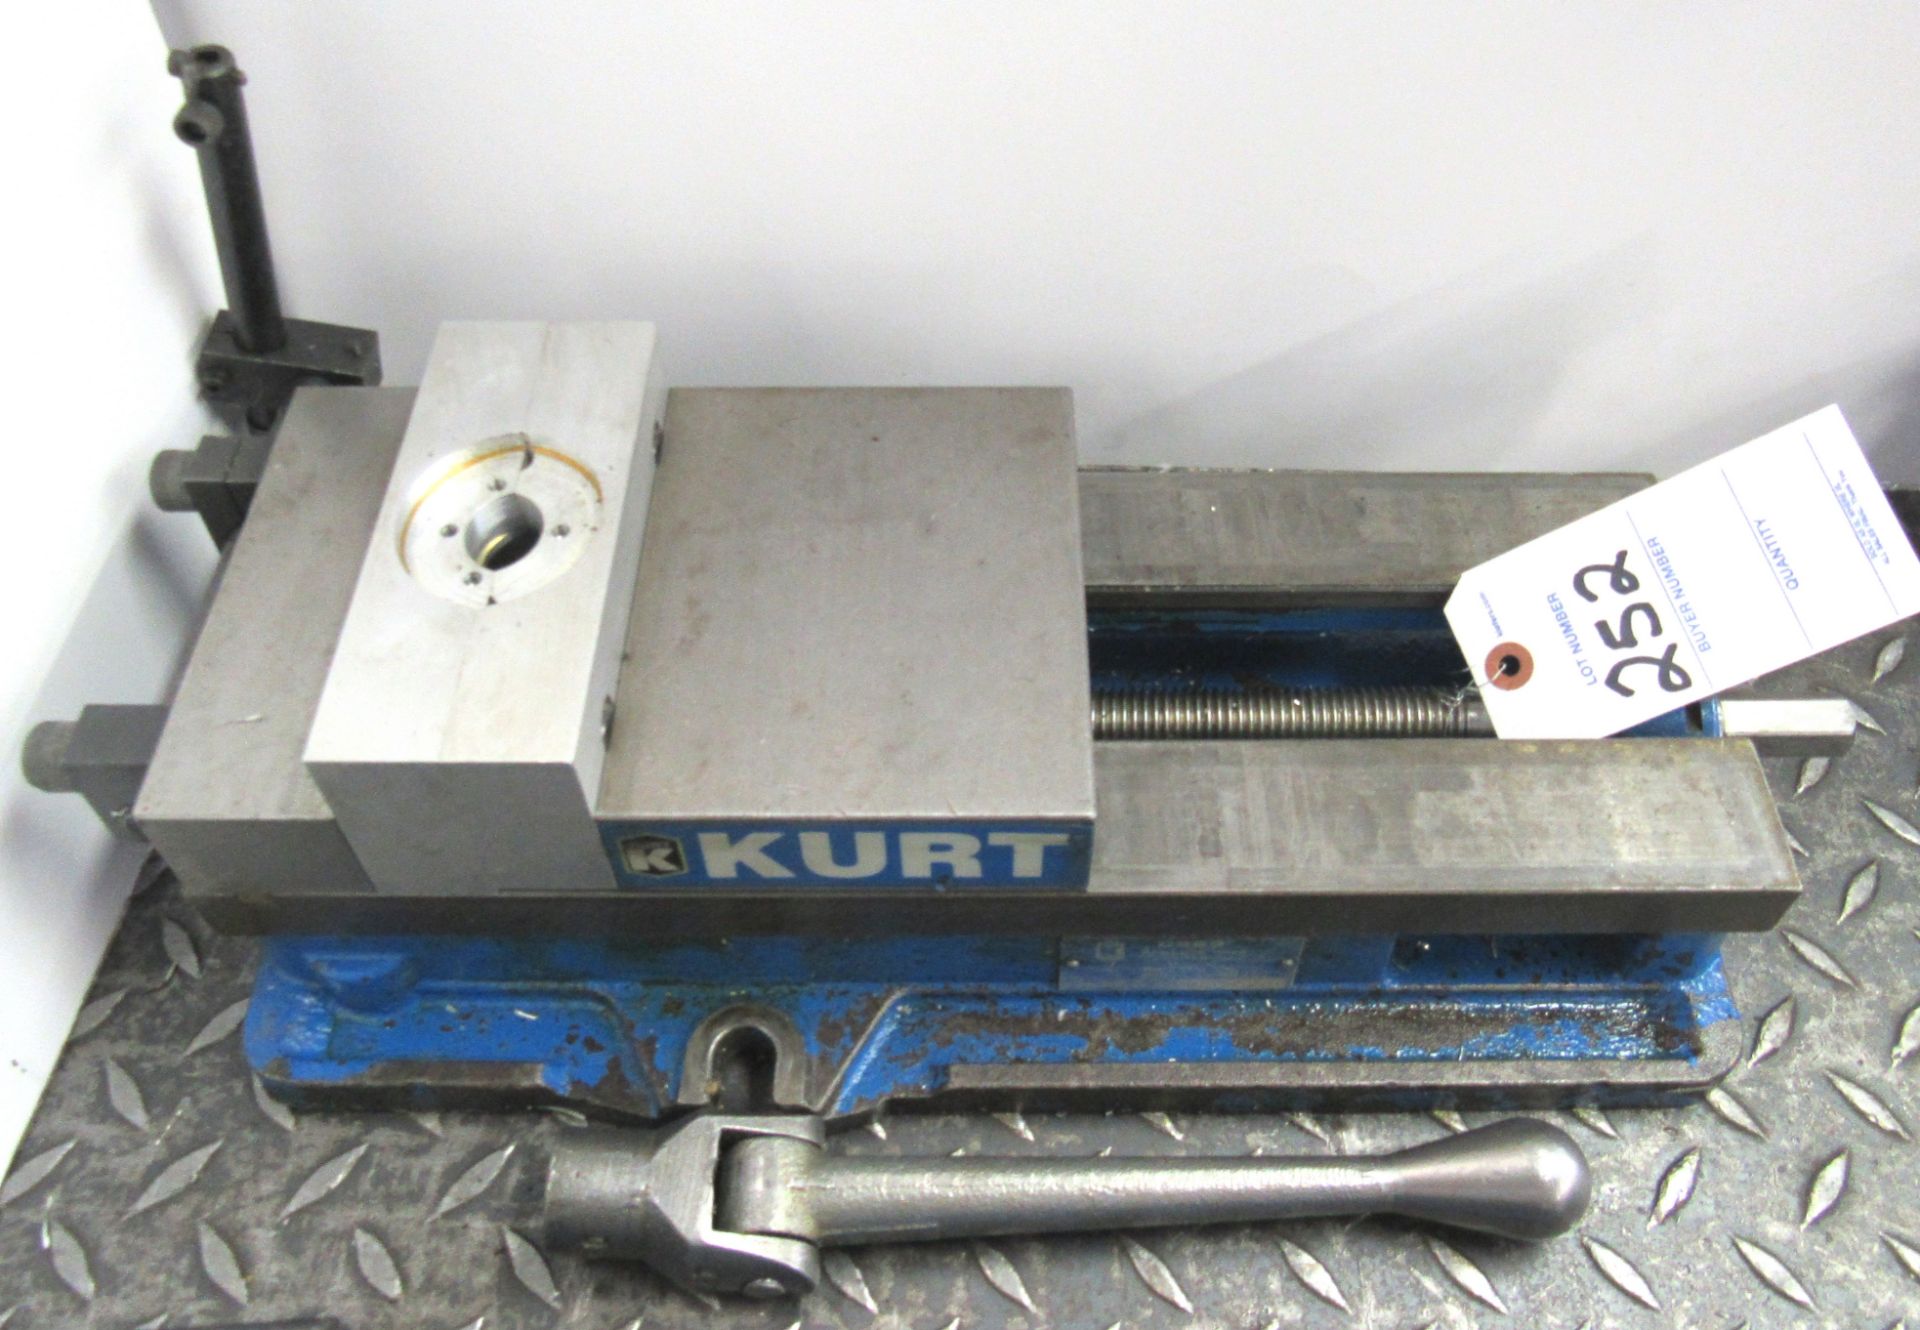 6" Kurt Model D688 Machine Vise